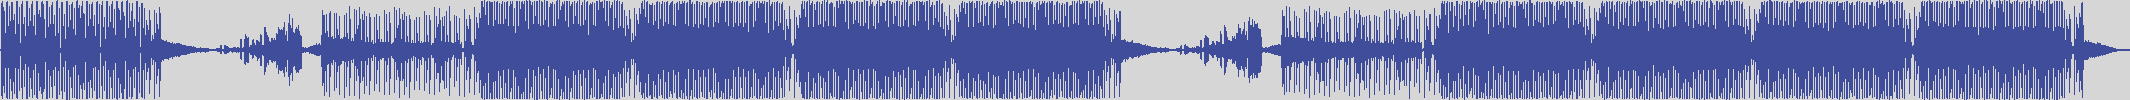 nf_boyz_records [NFY042] Jeff Koimbra - Into the Cosmos [Consecutive Mix] audio wave form